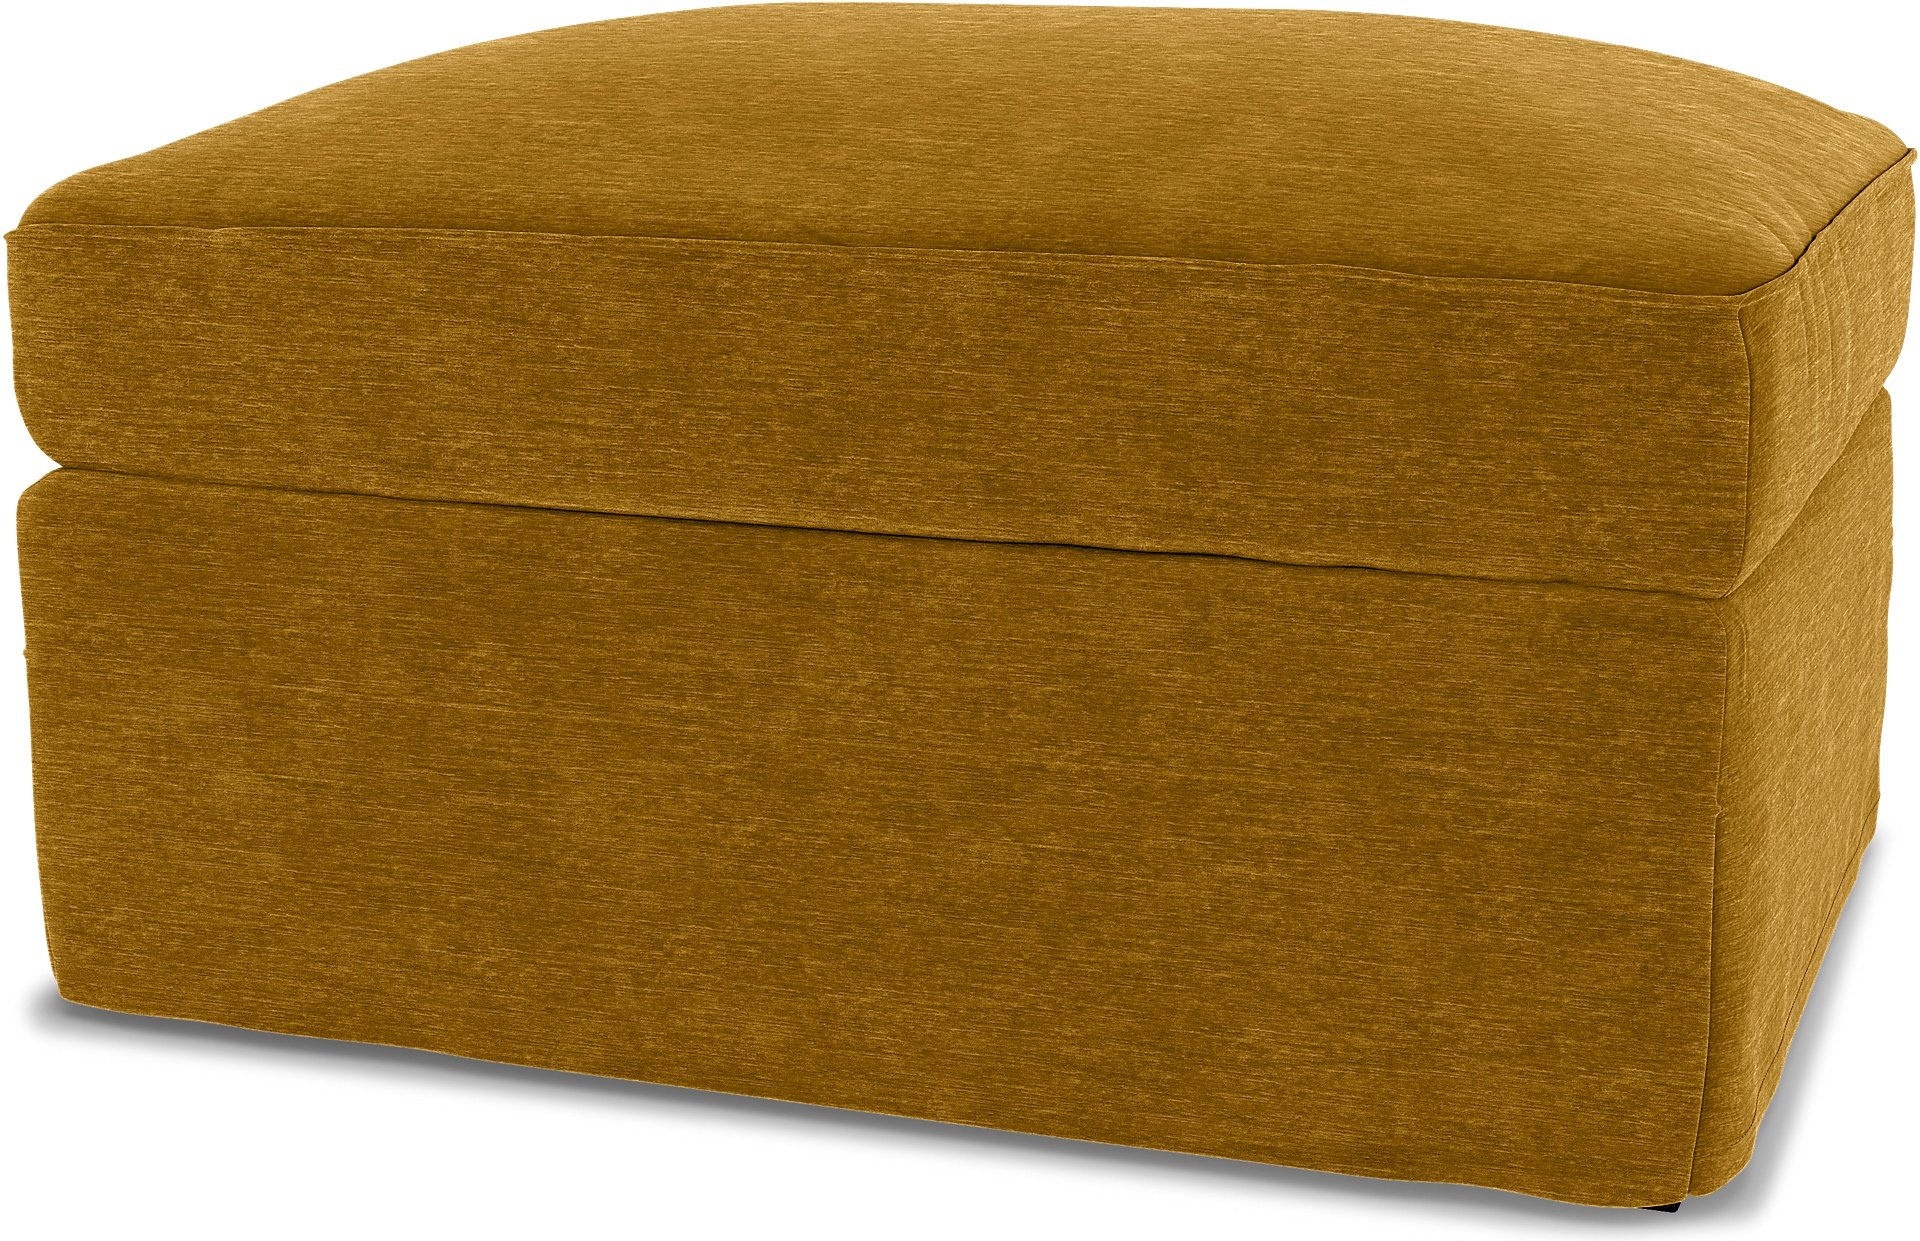 IKEA - Gronlid Footstool with Storage Cover, Tumeric, Velvet - Bemz